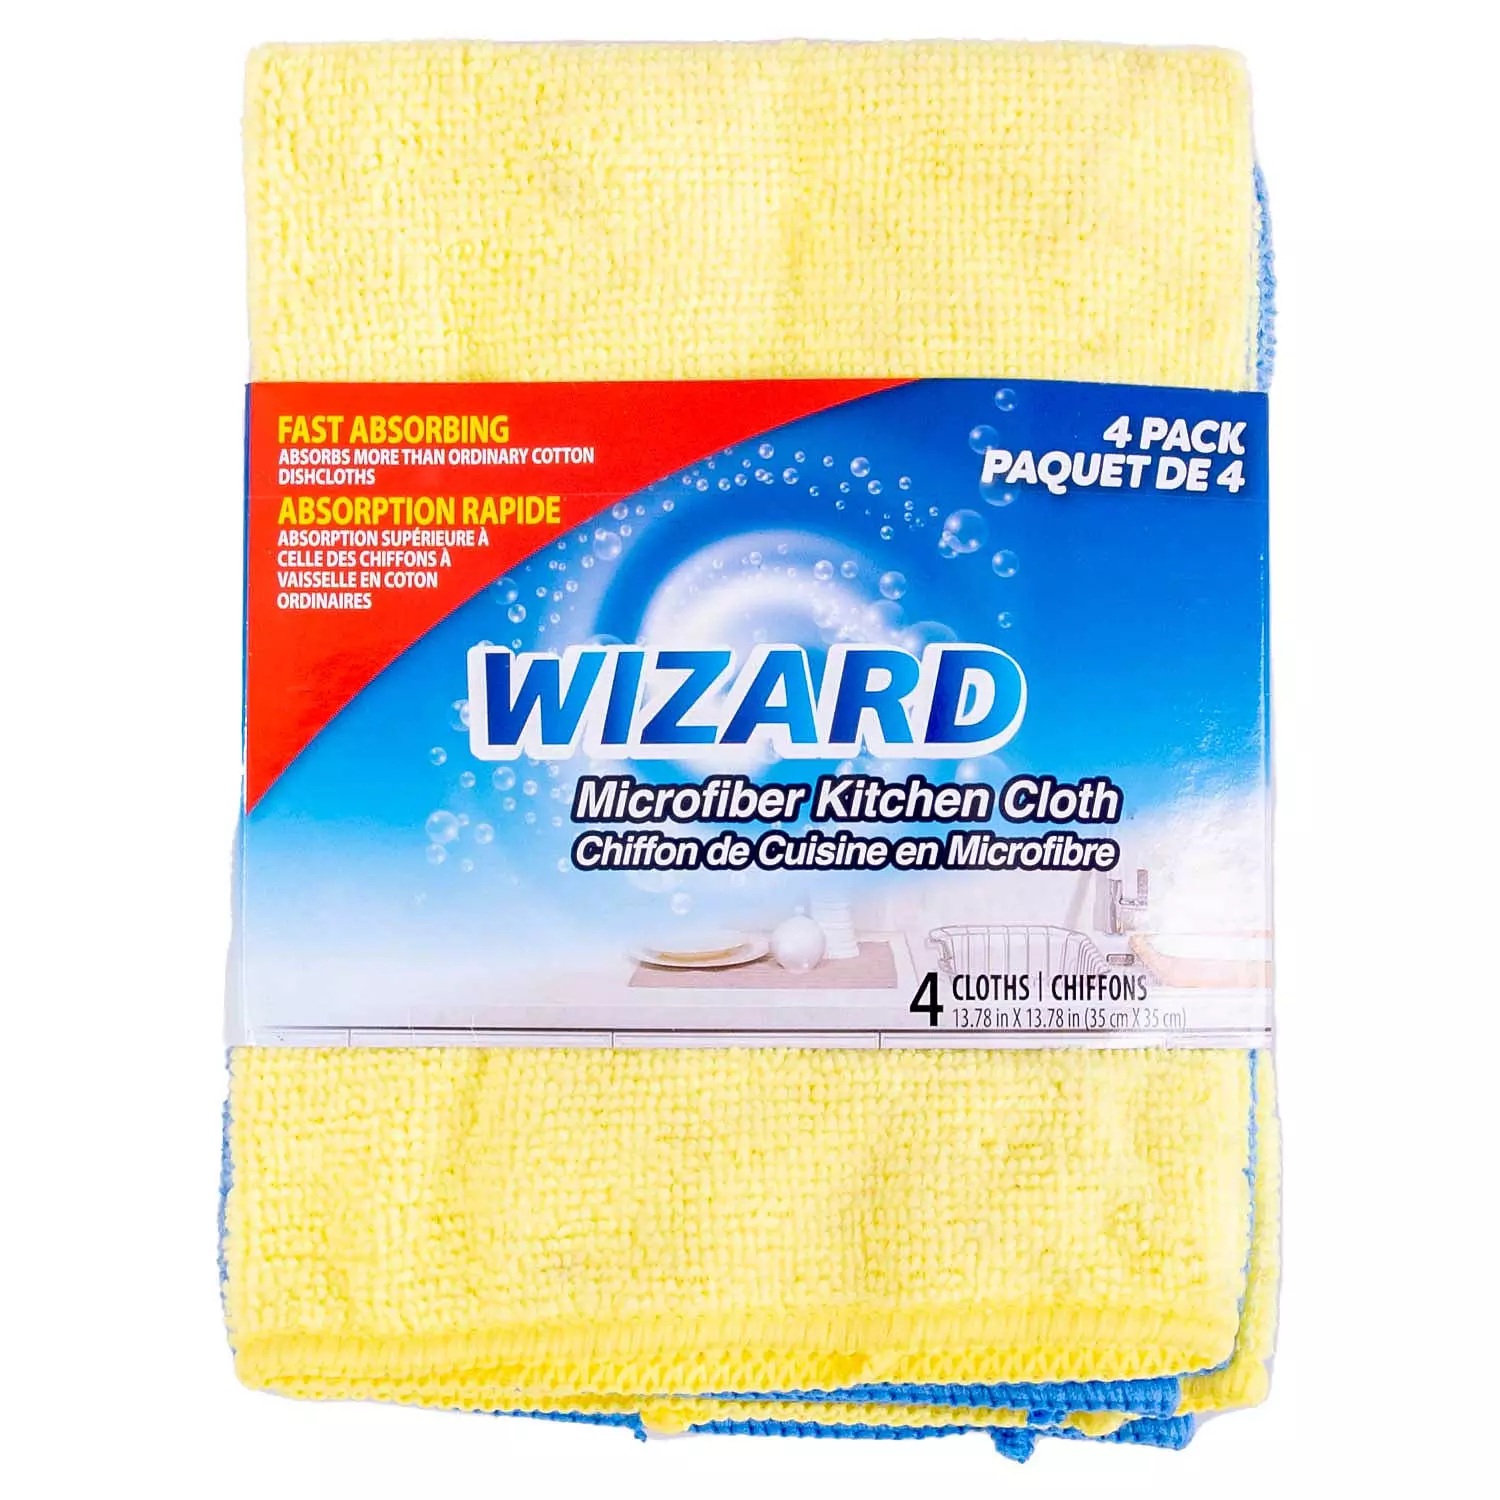 Wizard - Microfiber kitchen cloths, pk. of 4, yellow & blue